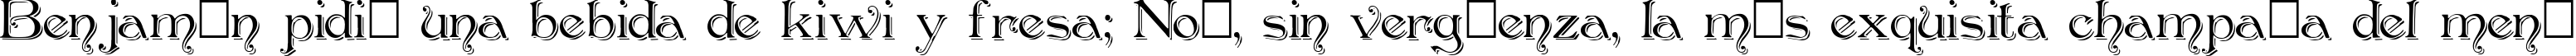 Пример написания шрифтом Antikvar Shadow Roman текста на испанском